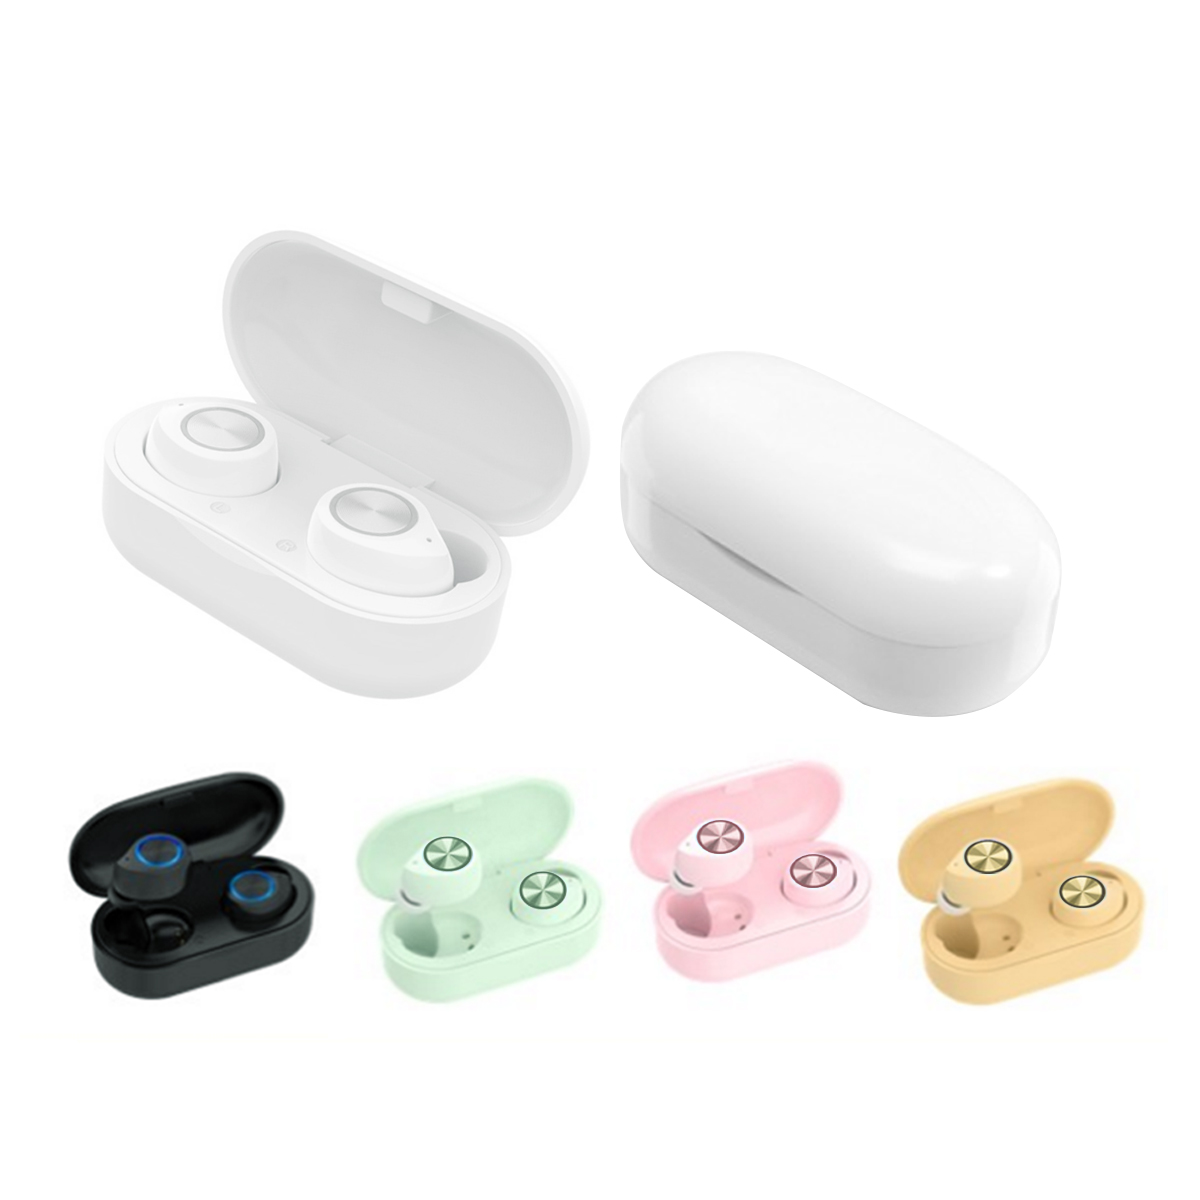 Macaron Wireless Bluetooth Earbuds